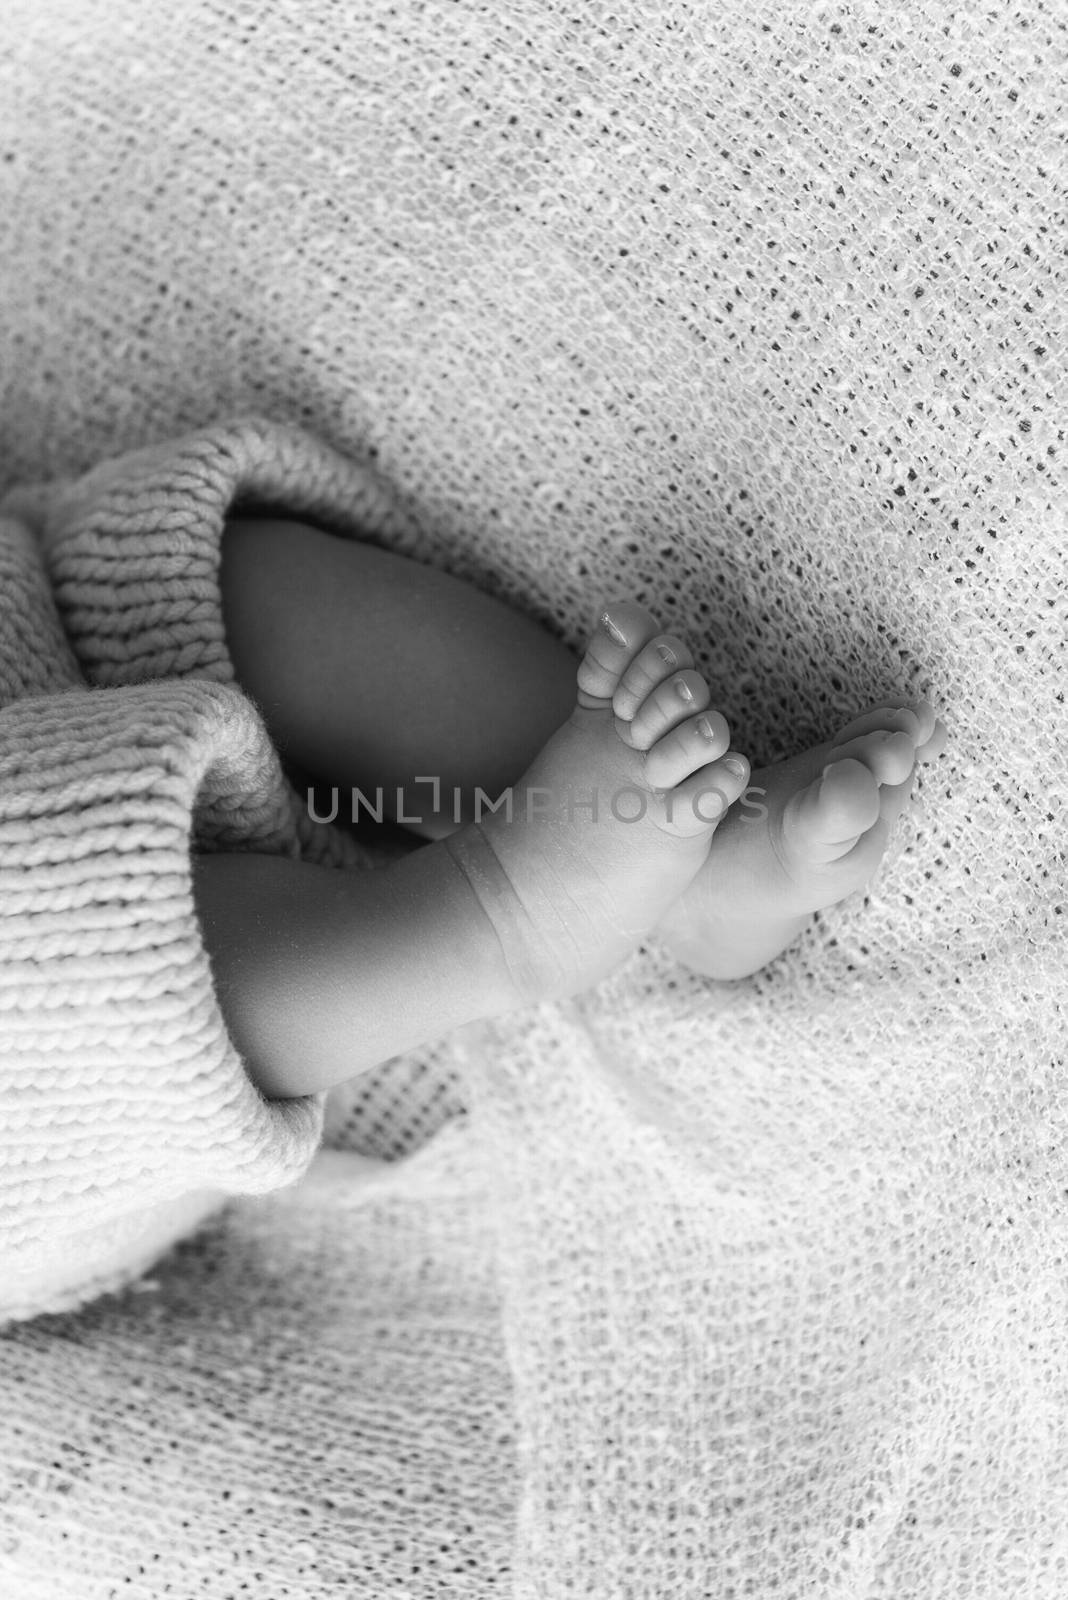 Closeup of a newborn baby feet by marcorubino